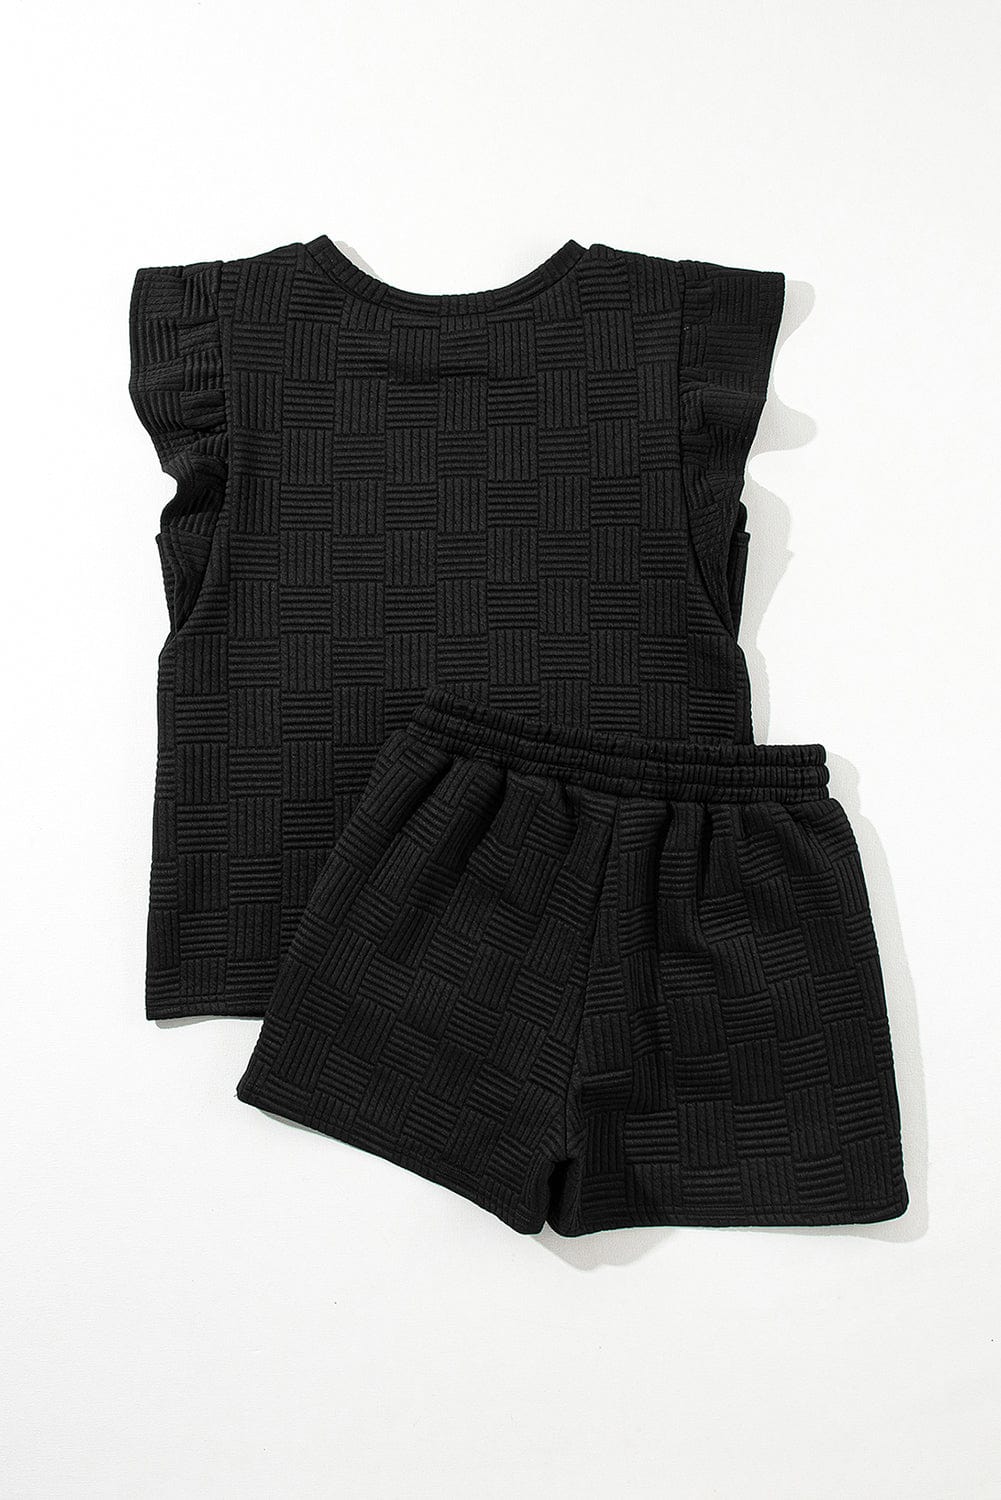 Shoppe EZR Two Piece Sets/Short Sets Black Textured Ruffled Sleeve Tee and Drawstring Shorts Set